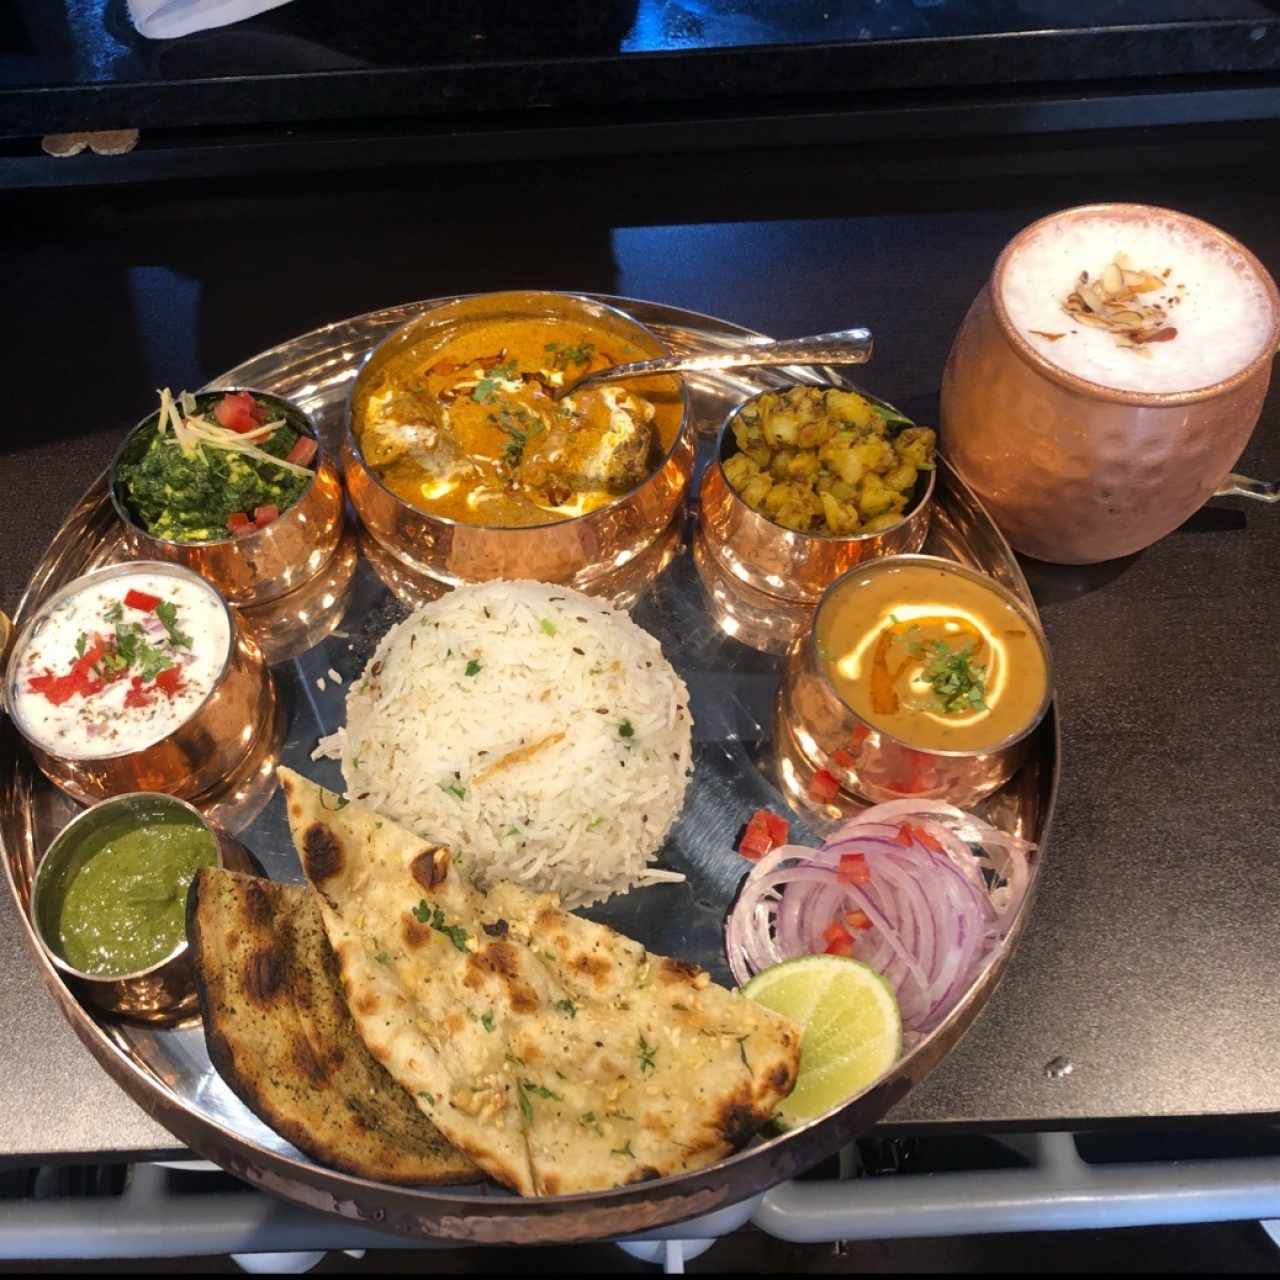 Shahi Thali con Chicken tikka, palak paneer, jeera aloo, raita, dal makhani, pan naan y jeera basmati rice ....delicioso todos...super recommandble...